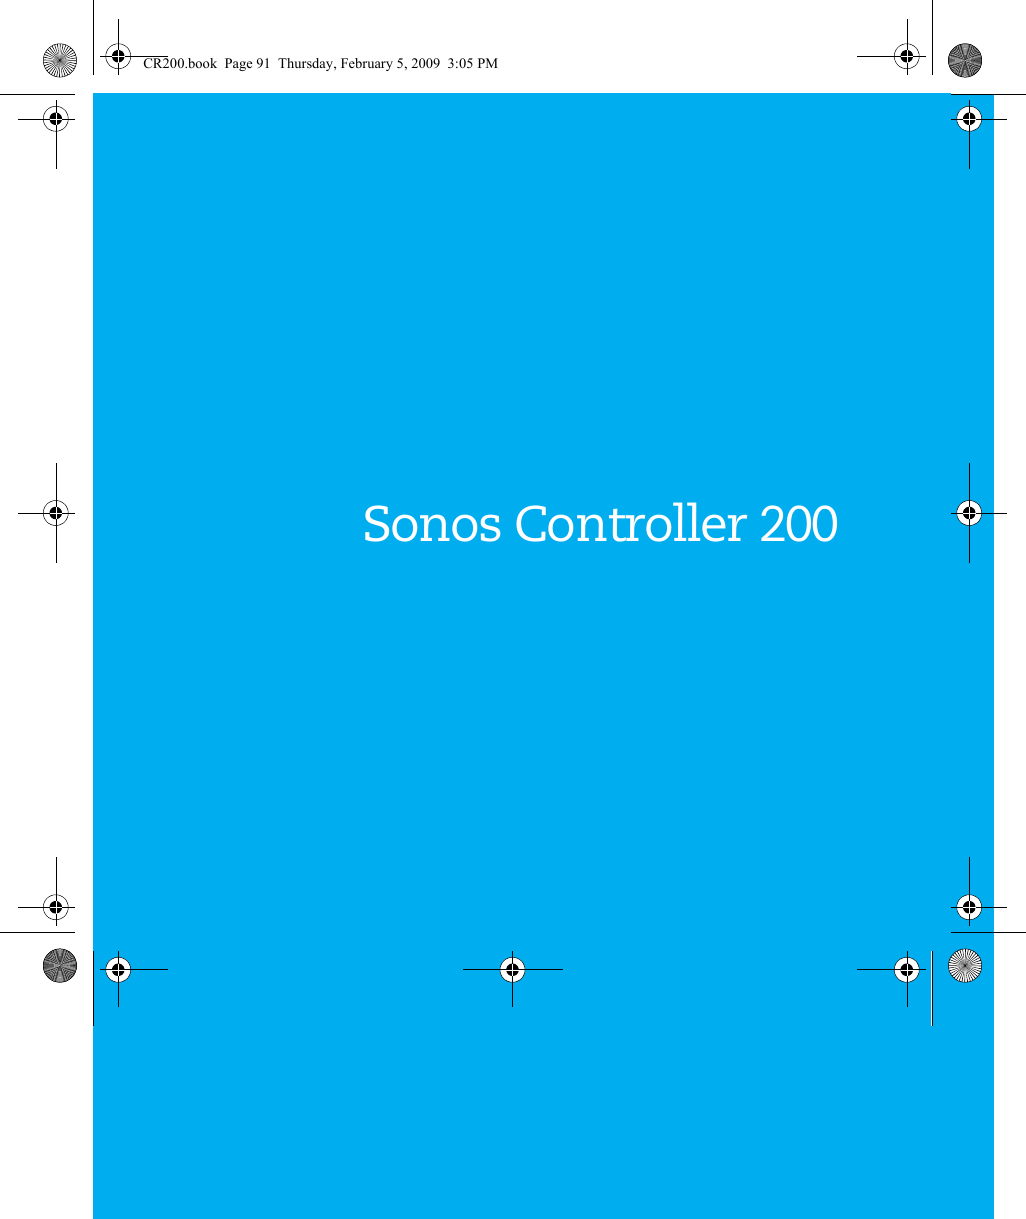 Sonos Controller 200CR200.book  Page 91  Thursday, February 5, 2009  3:05 PM